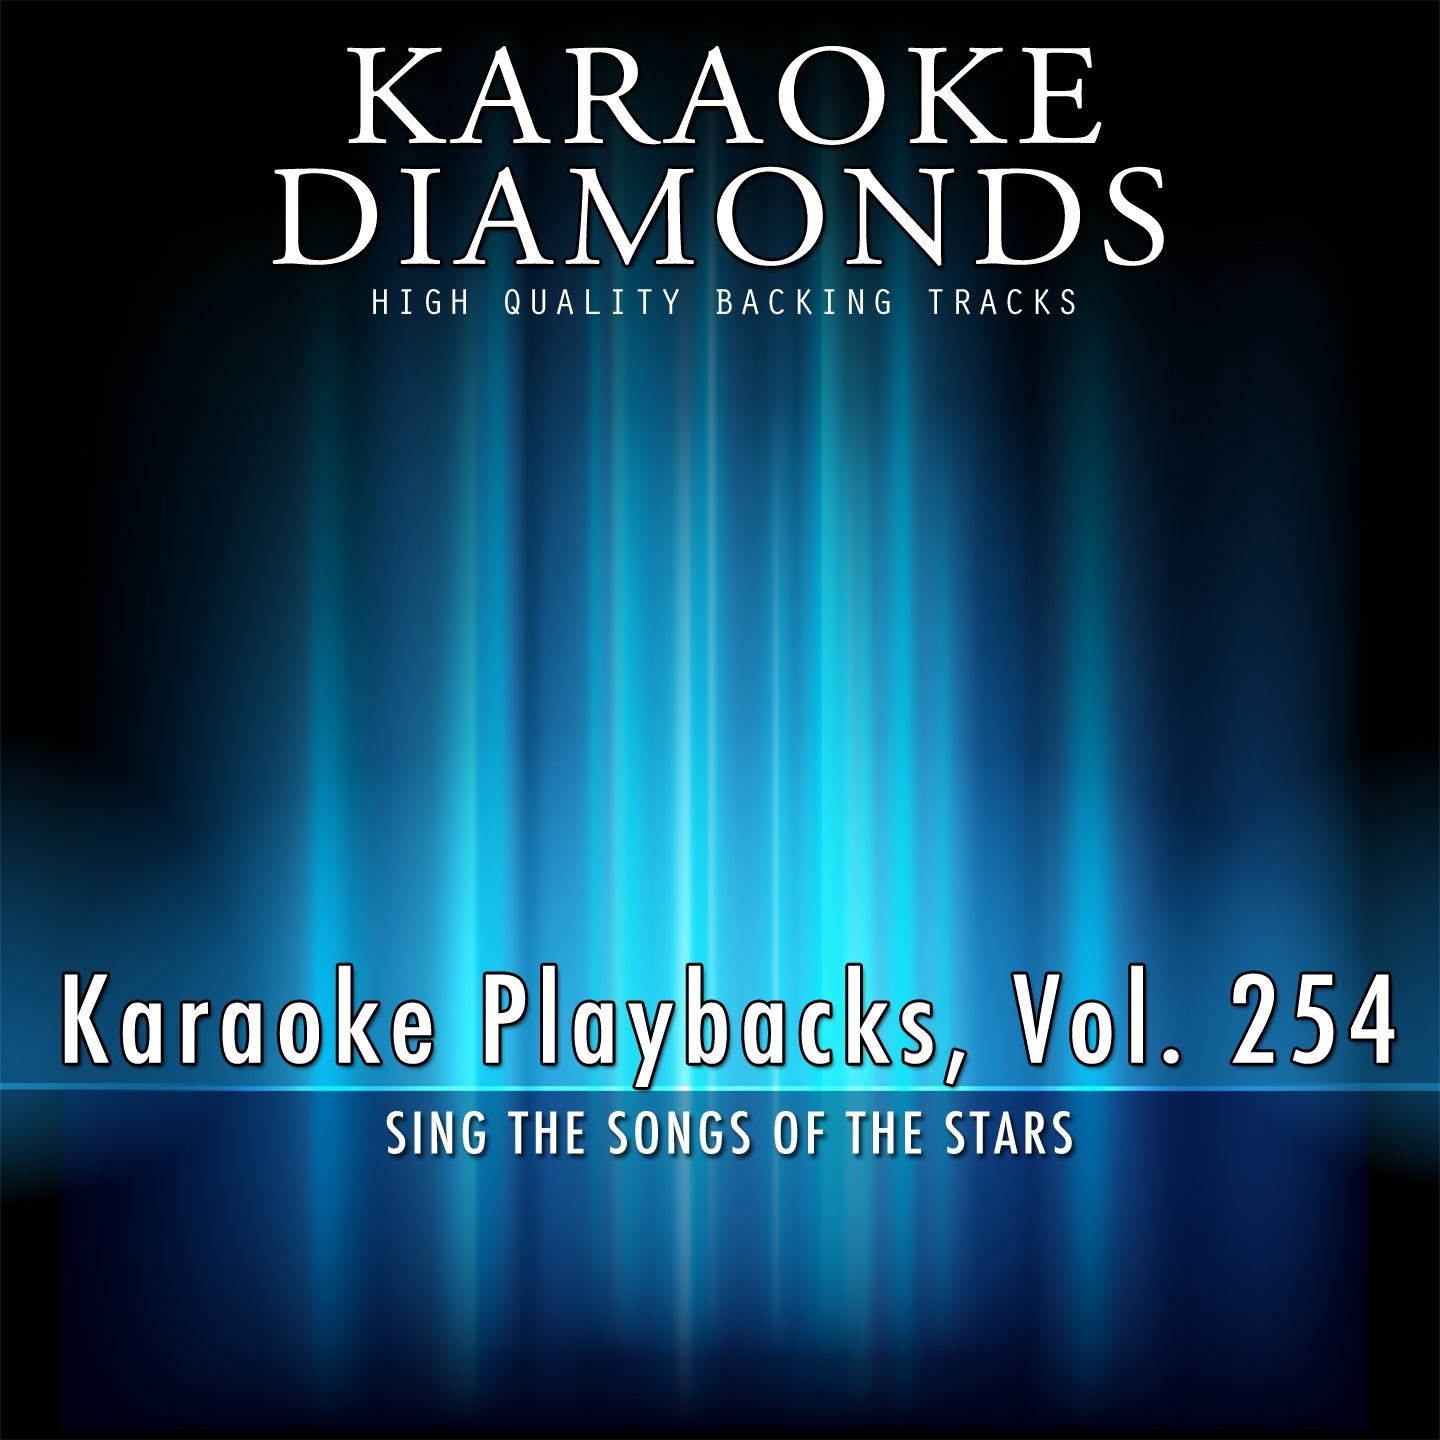 Your Song (Karaoke Version)